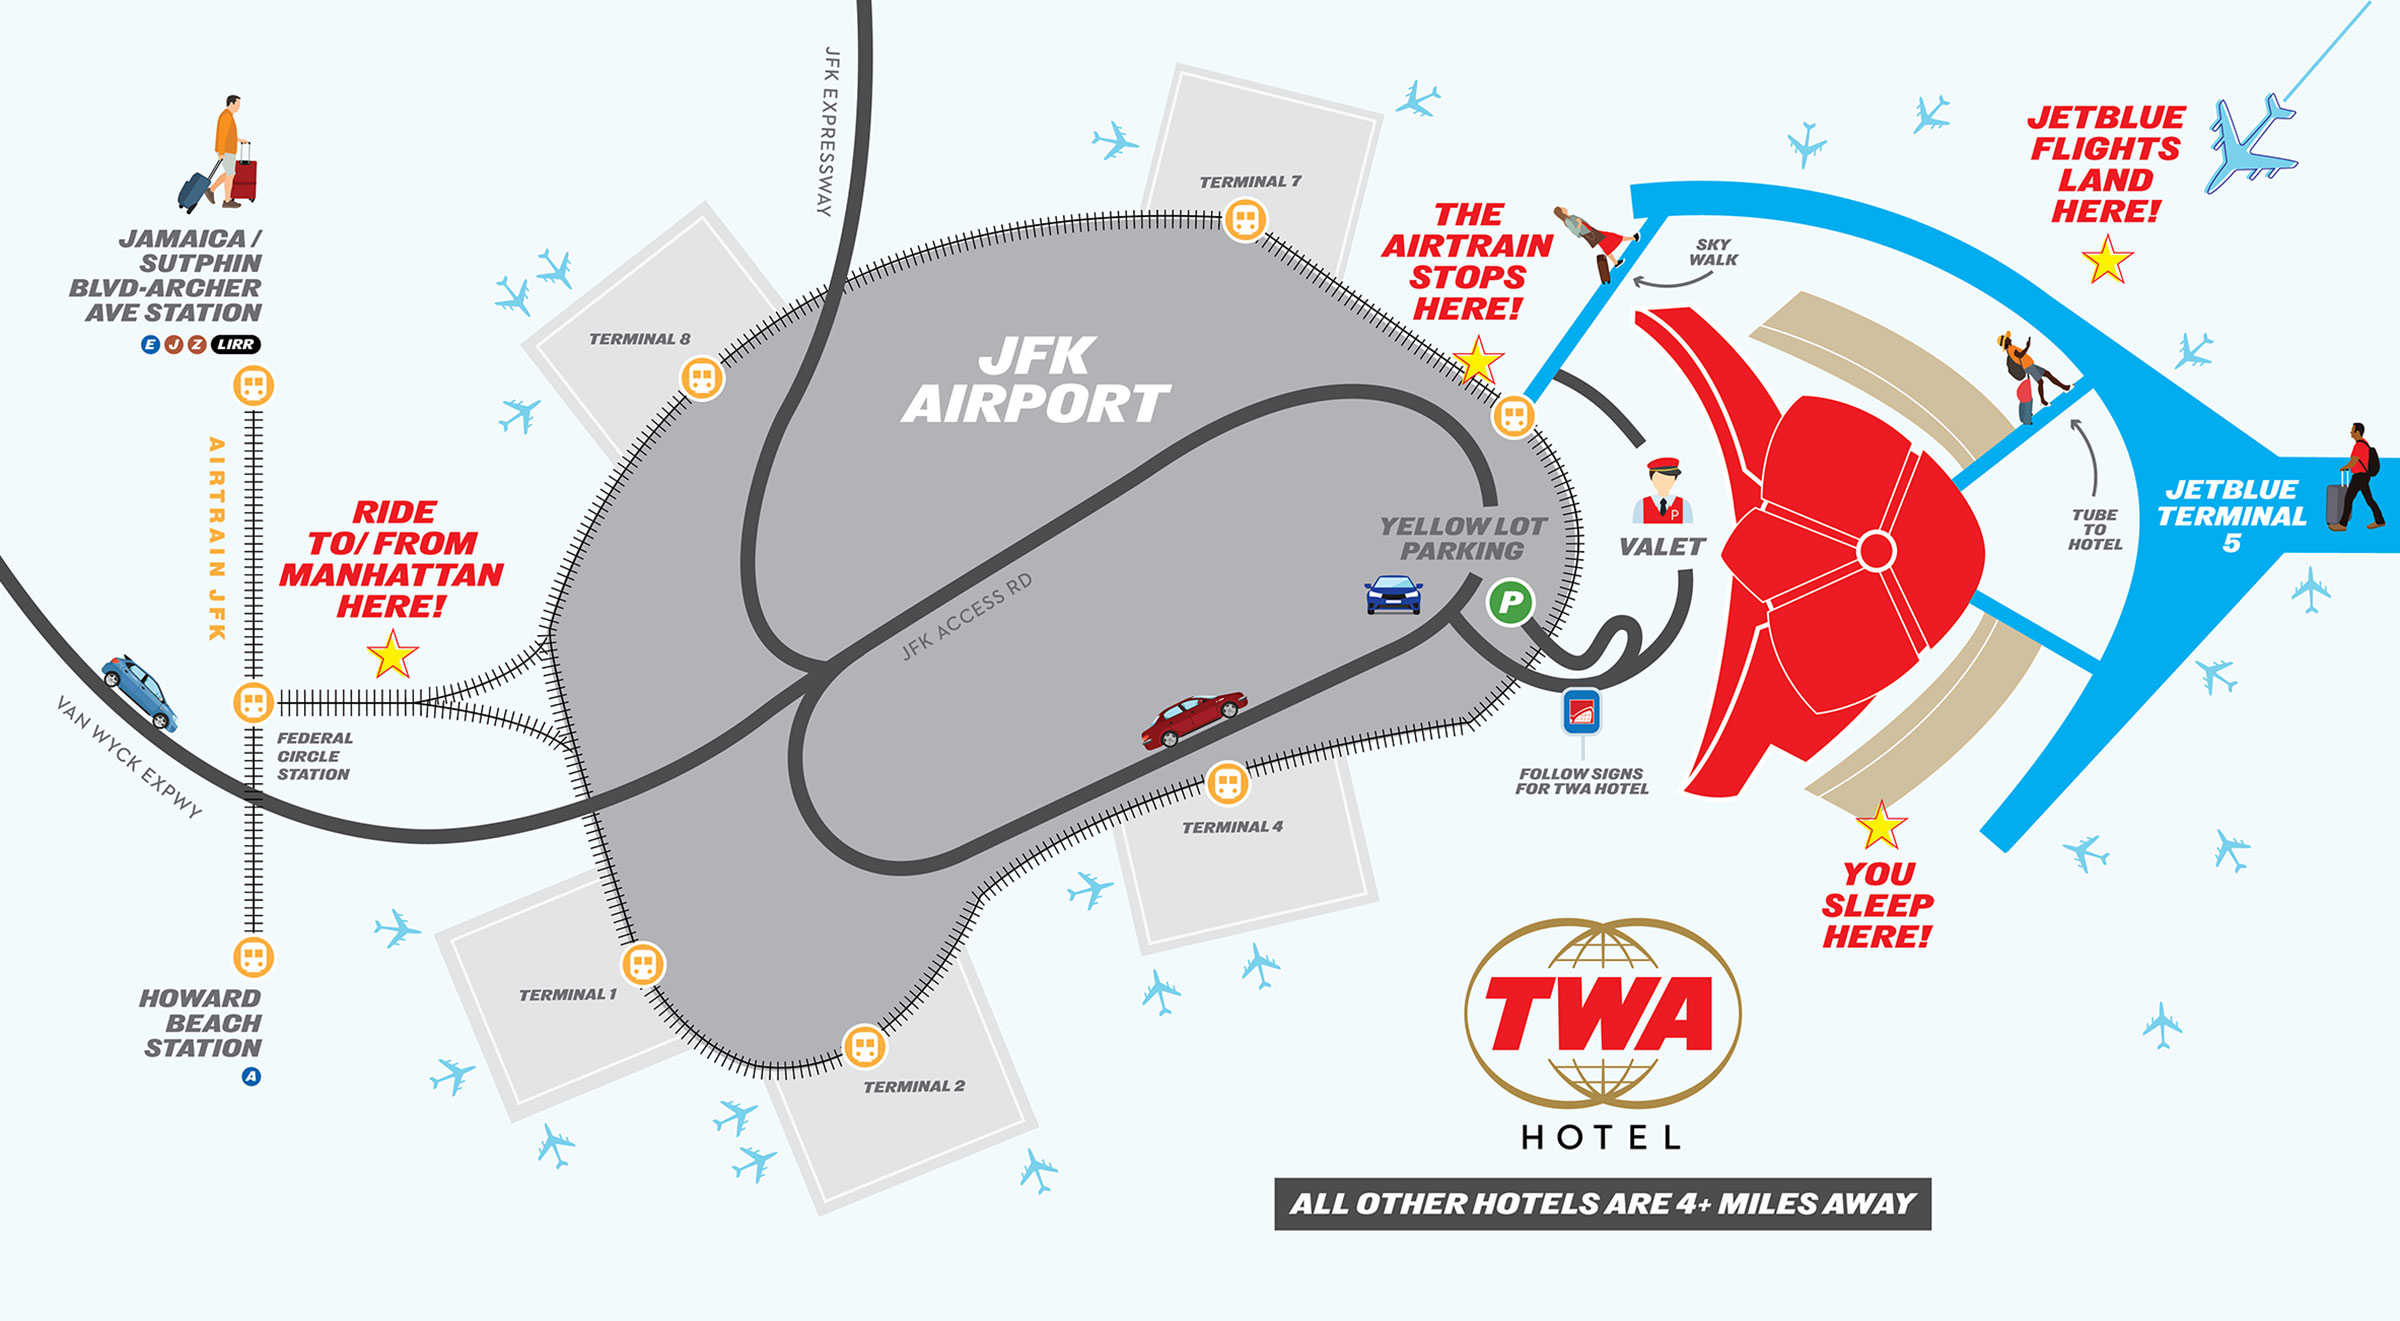 TWA Hotel Map